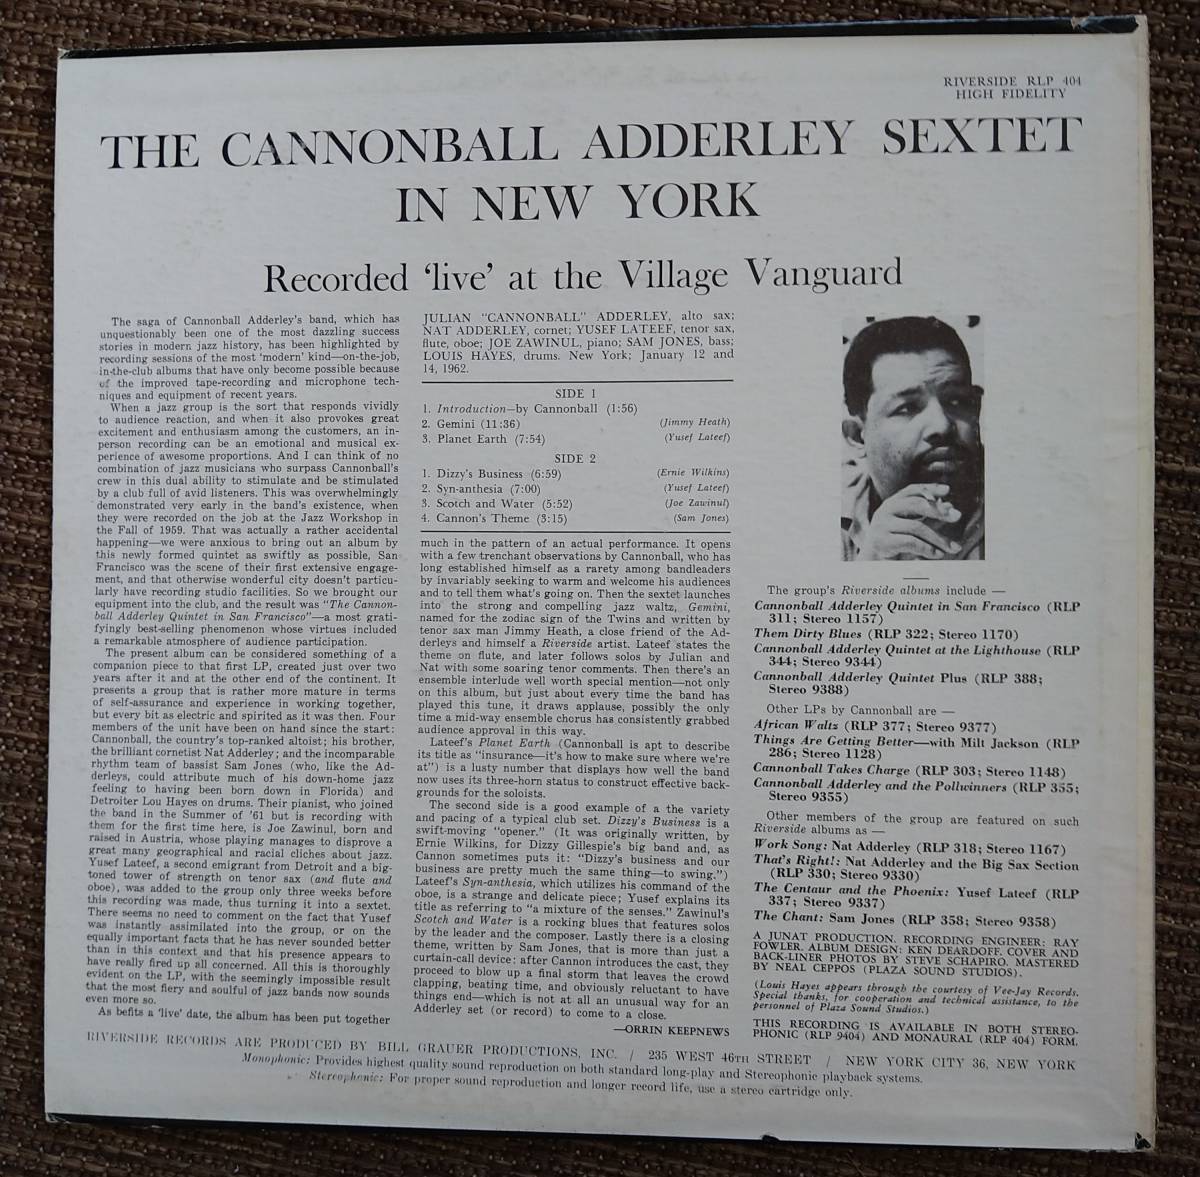 USモノオリジナル盤【Cannonball Adderley】両面青大ラベル 深溝 The Cannonball Adderley Sextet in New York (Riverside RLP404)_画像2